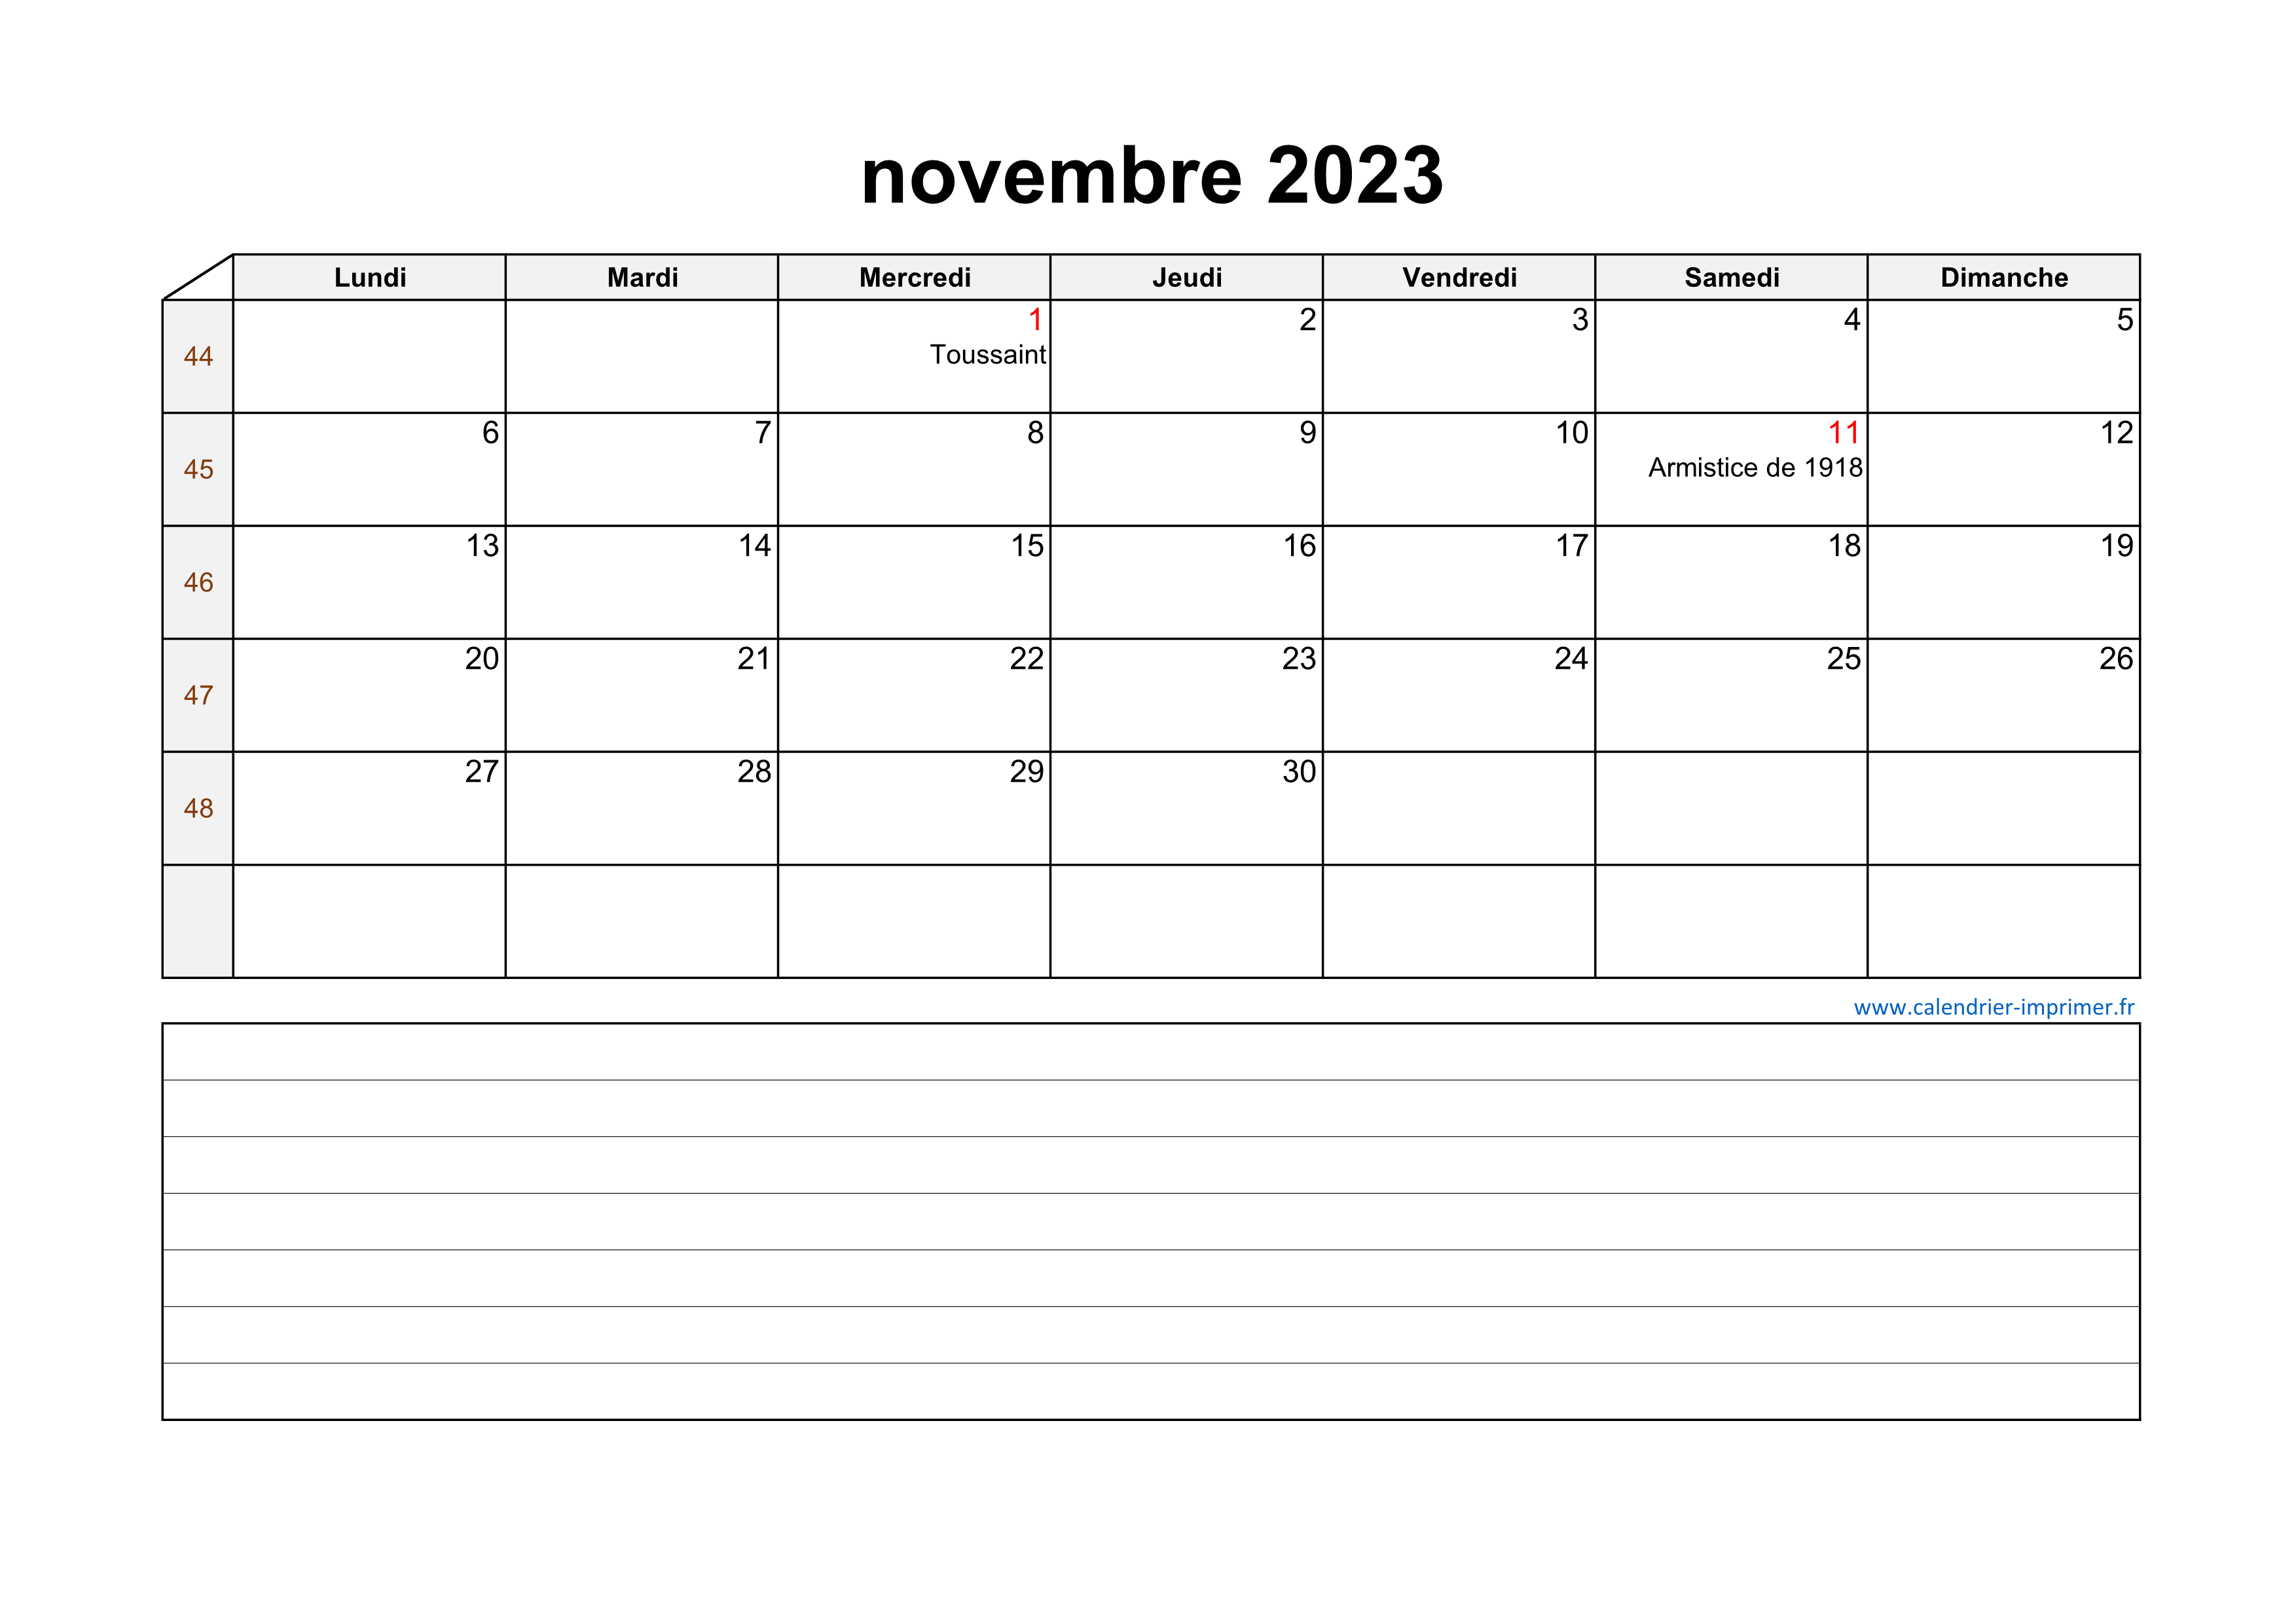 Calendrier Novembre 2023 à consulter ou imprimer 